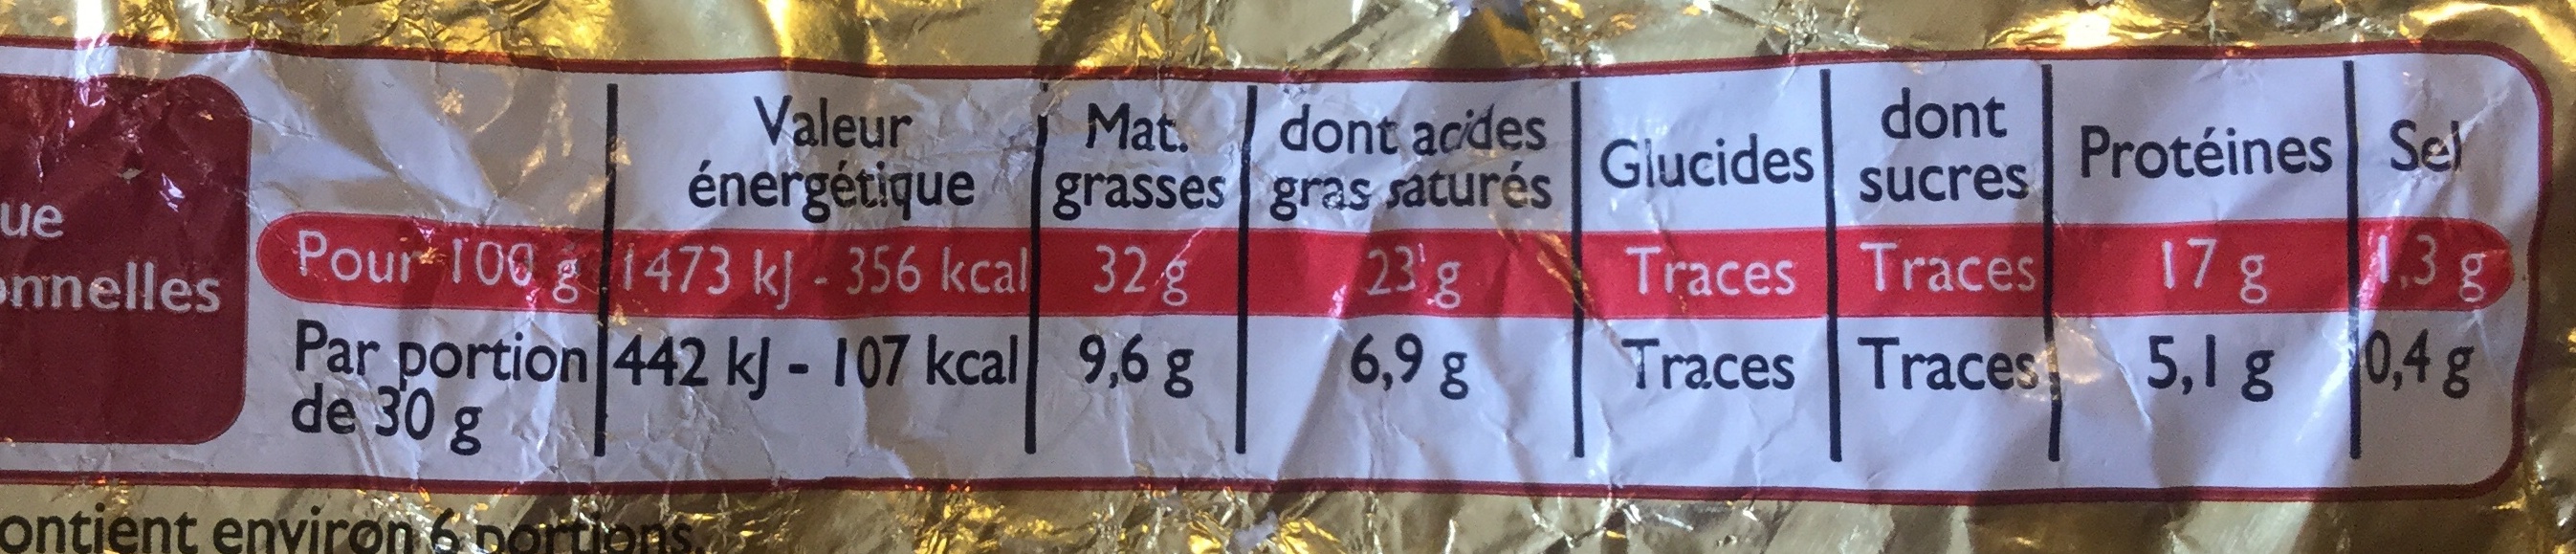 Pointe de Brie (32 % MG) - Nutrition facts - fr